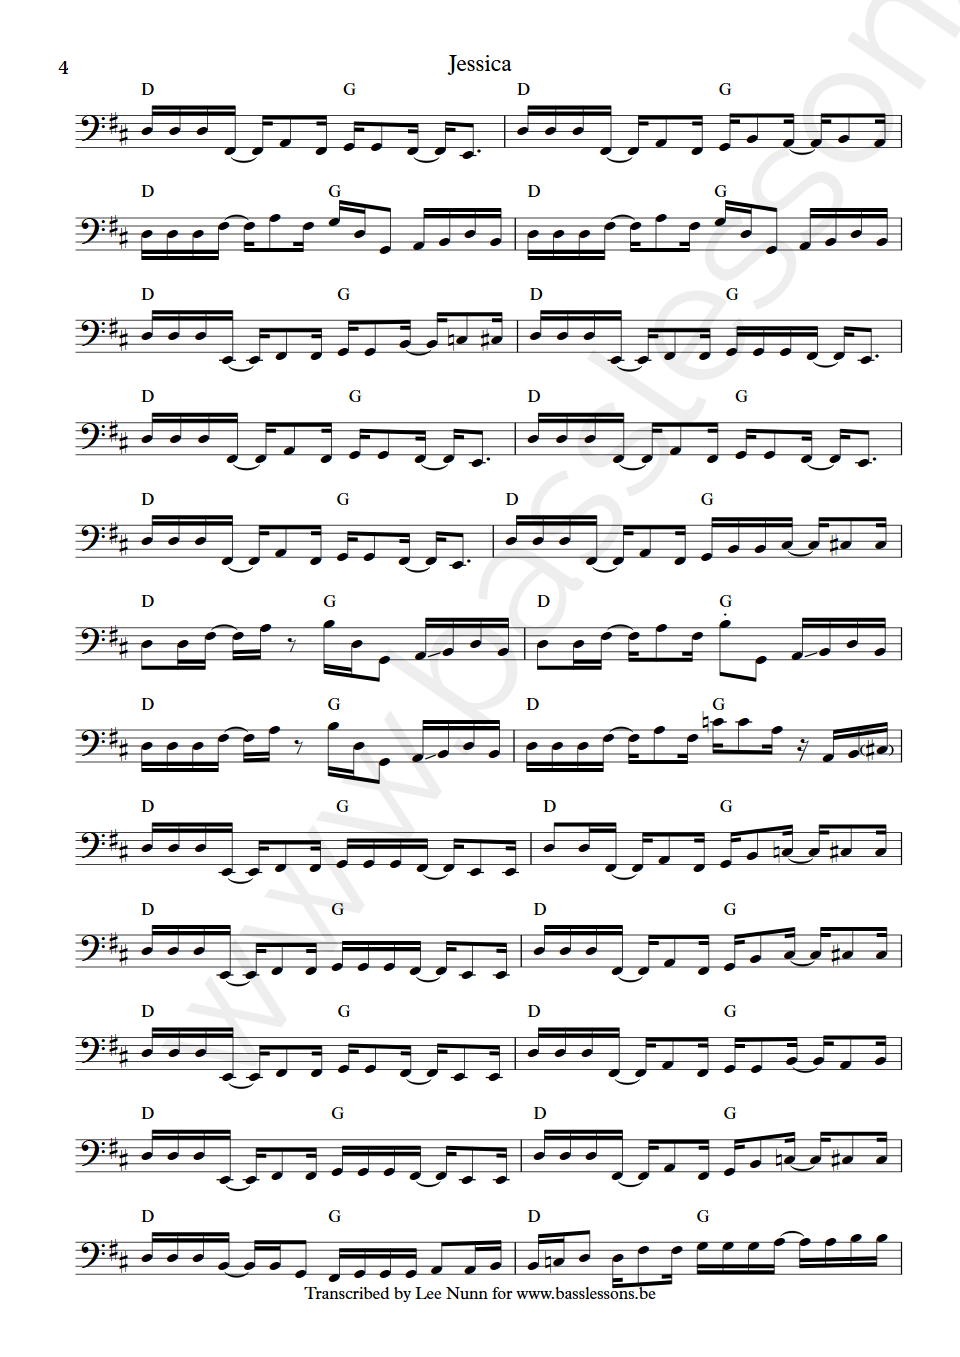 Allman Brothers Band Jessica bass transcription part 4